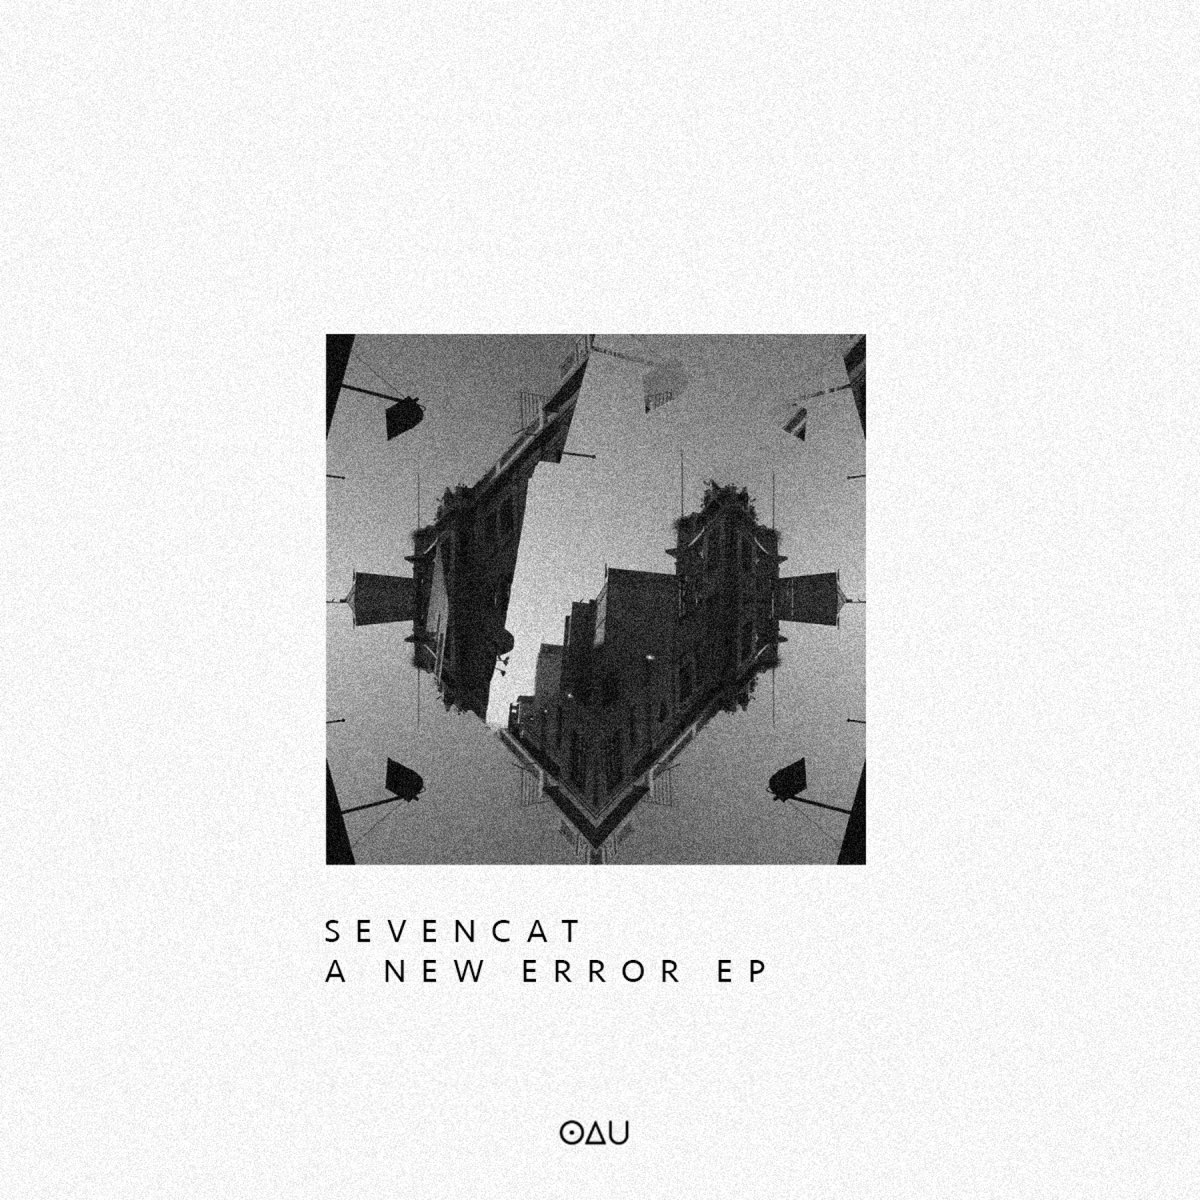 ‎A new error - EP - Album by SevenCat - Apple Music